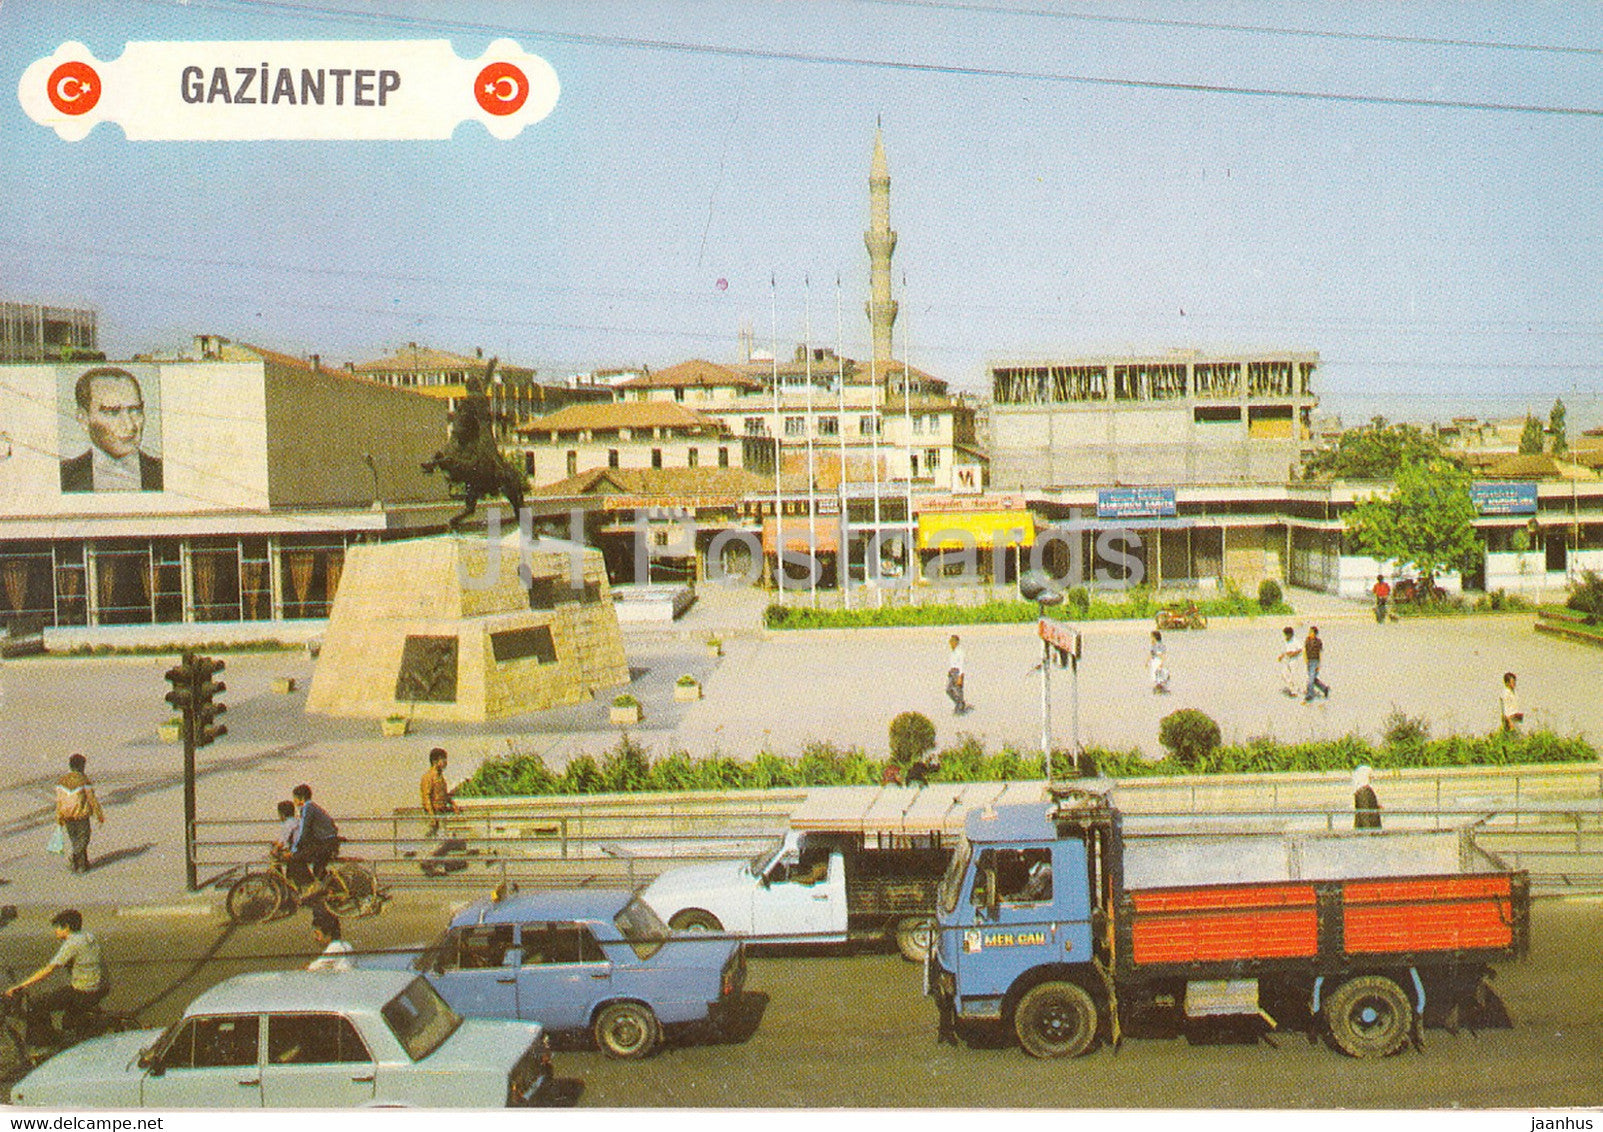 Gaziantep - car - truck - 1987 - Turkey - used - JH Postcards